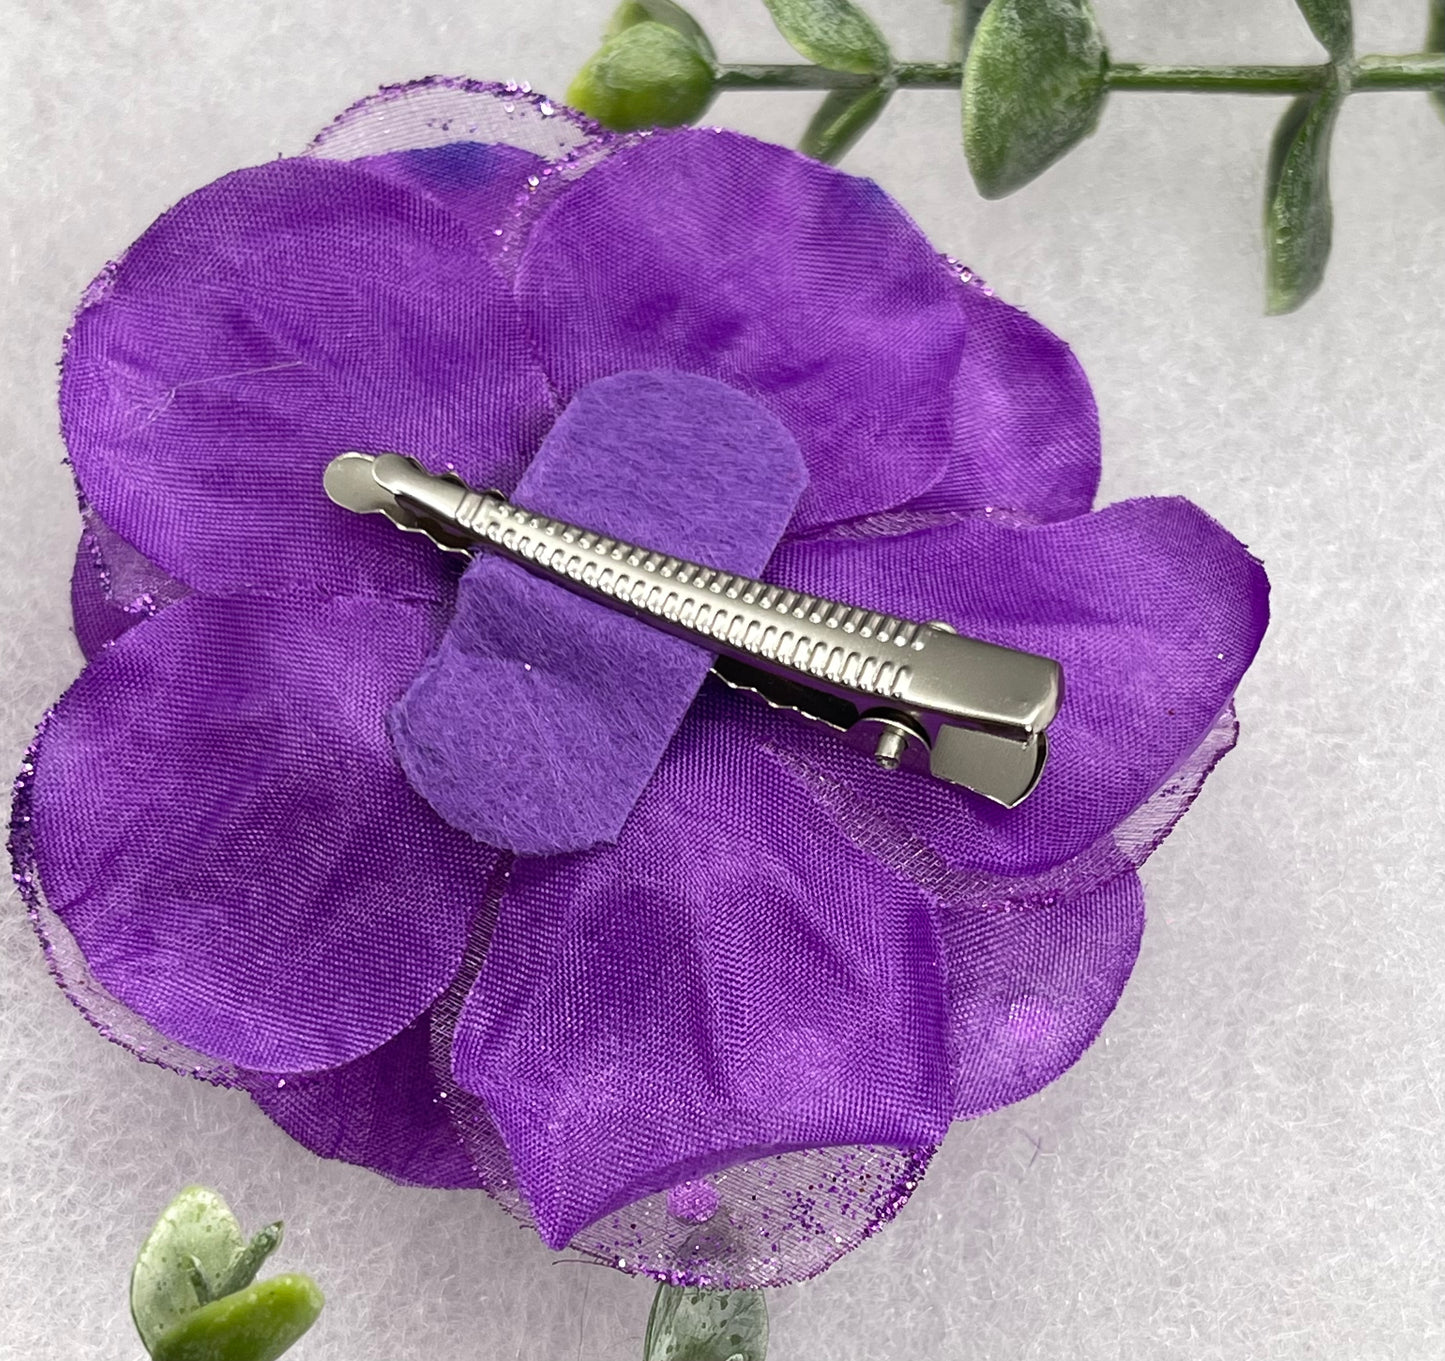 Purple Rose flower crystal rhinestone embellished alligator clip approximately 3.0” formal hair accessory wedding bridal engagement princess bridesmaid